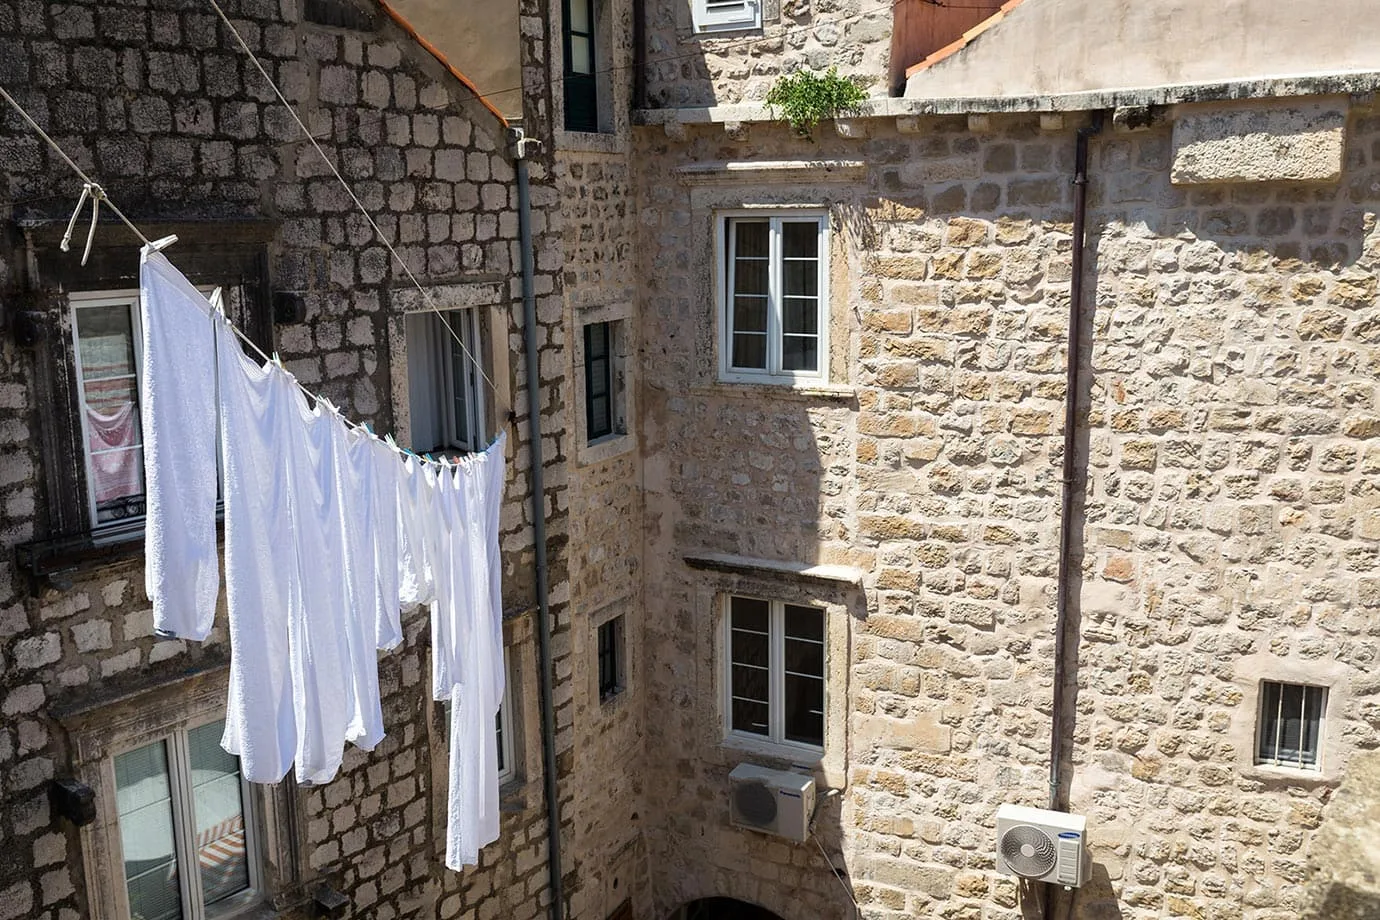 Washing hanging on a line in Croatia